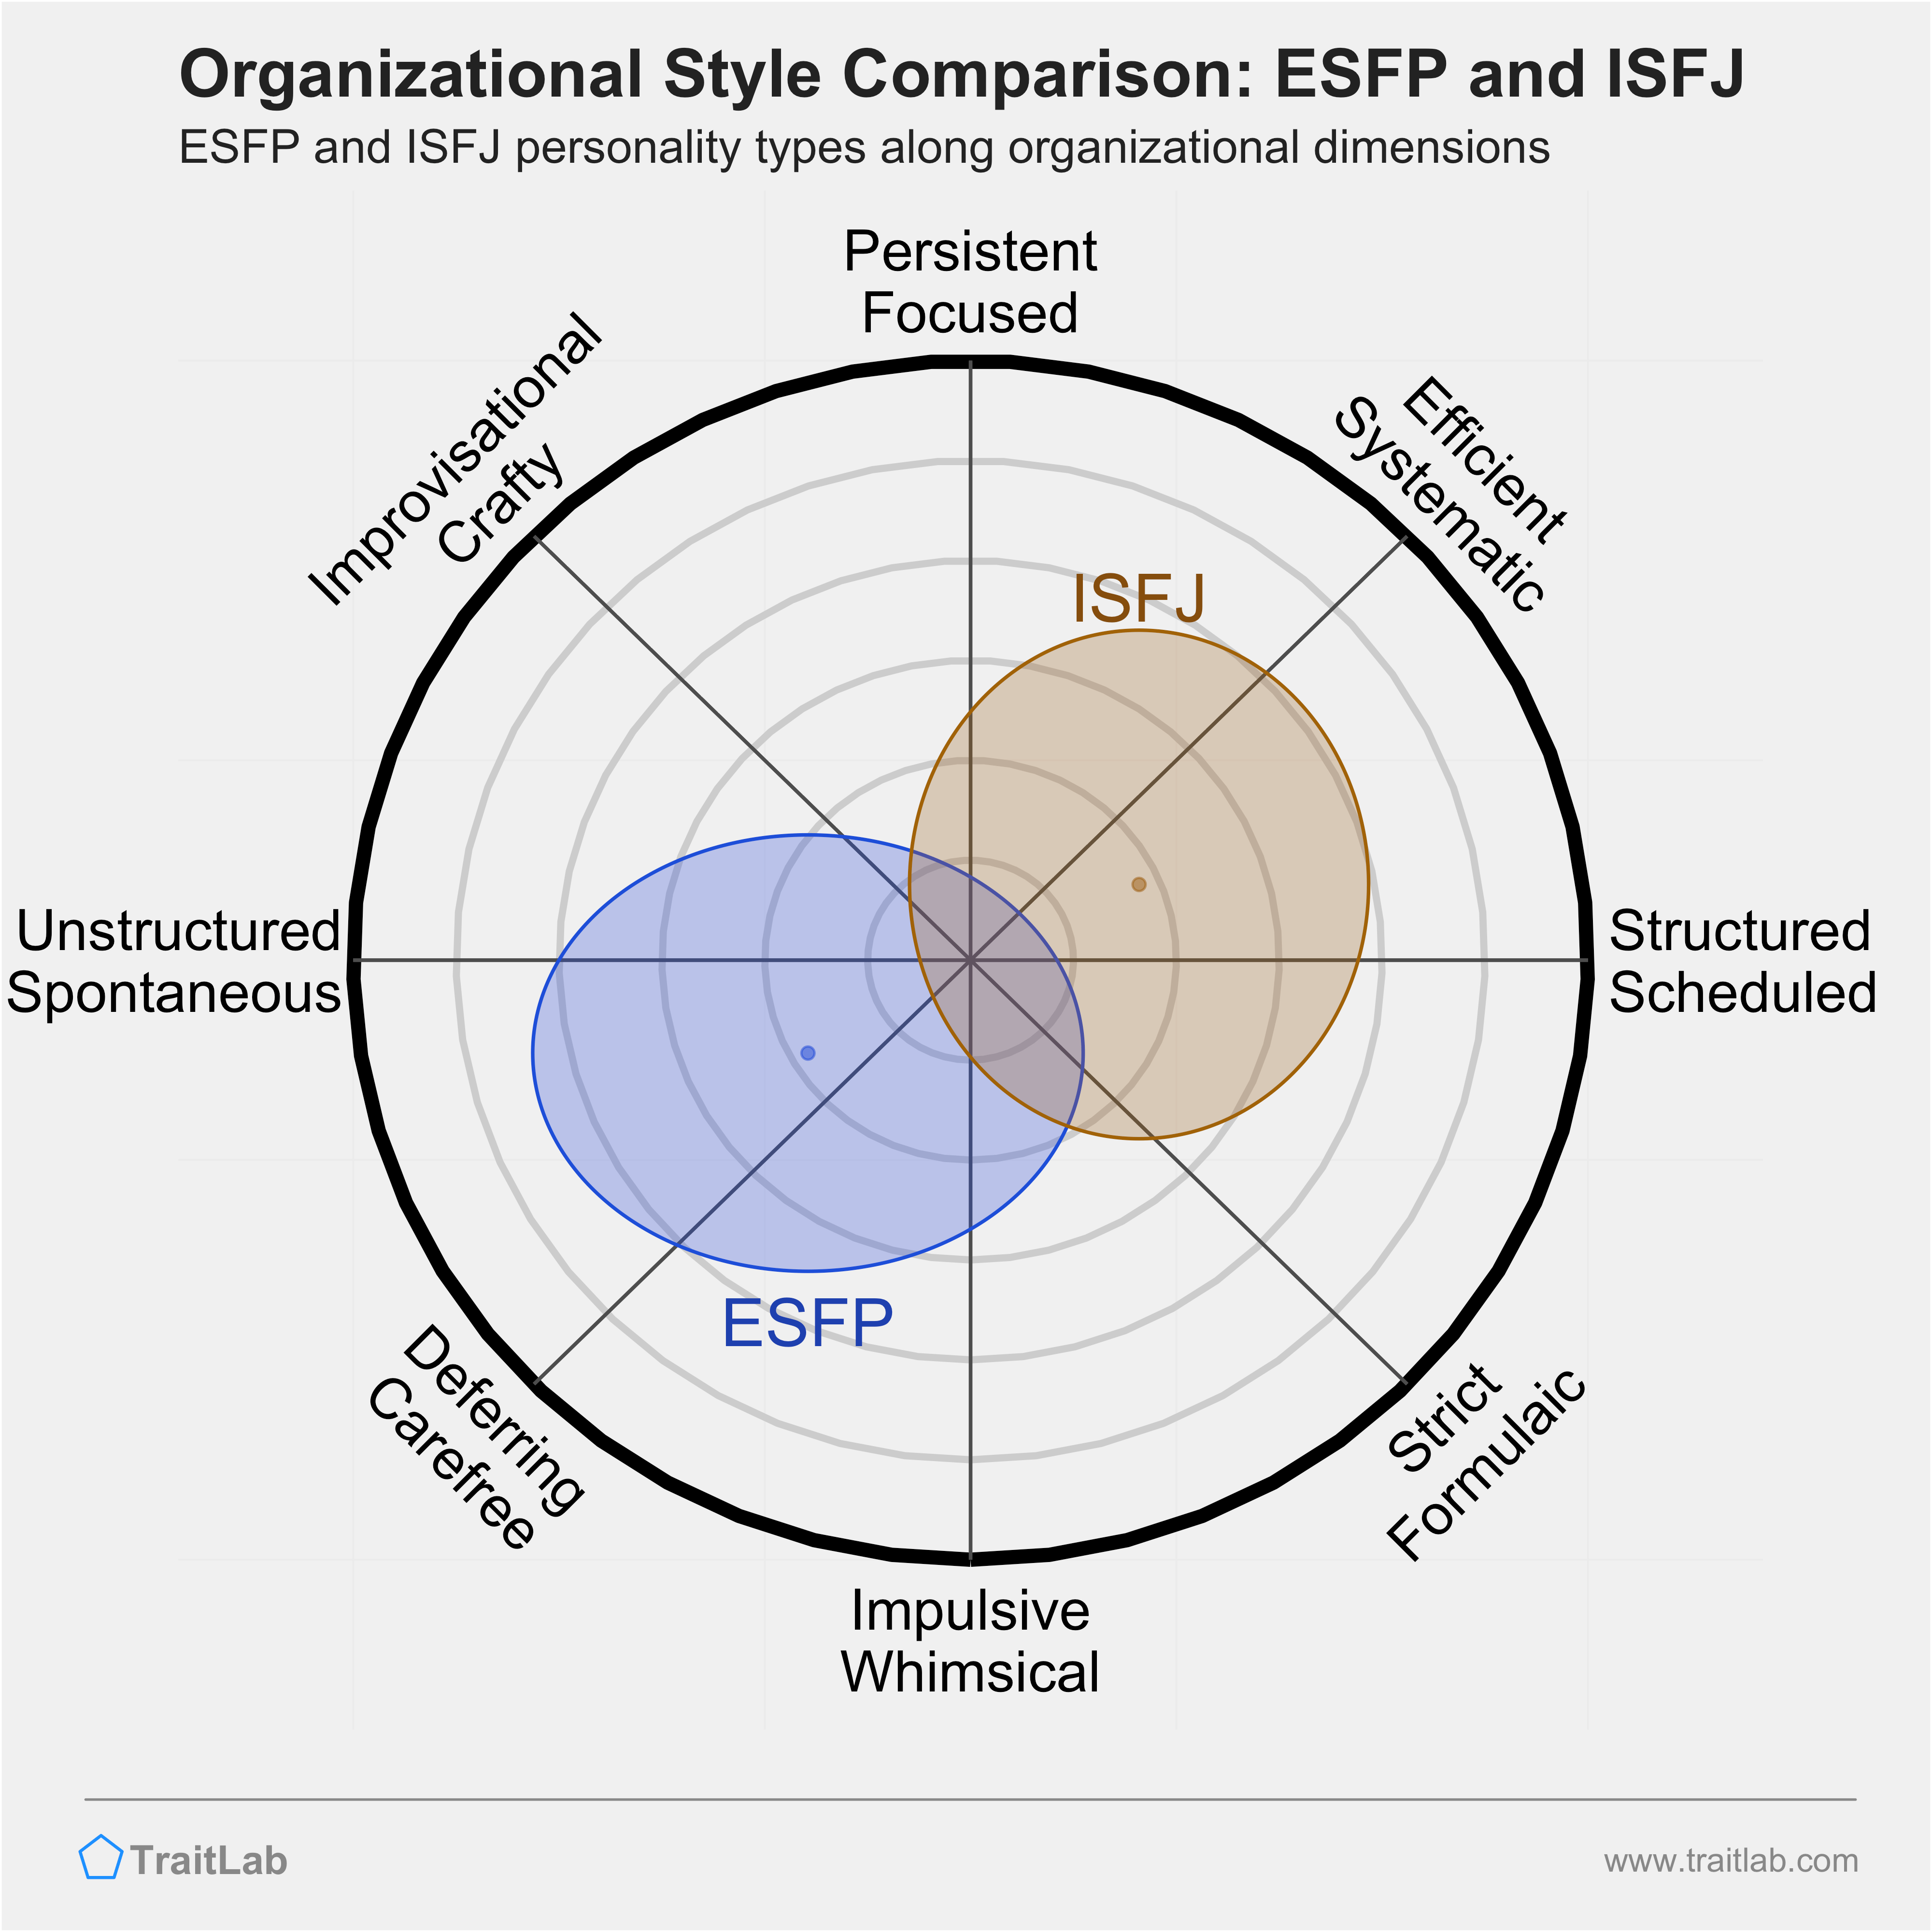 ESFP and ISFJ comparison across organizational dimensions